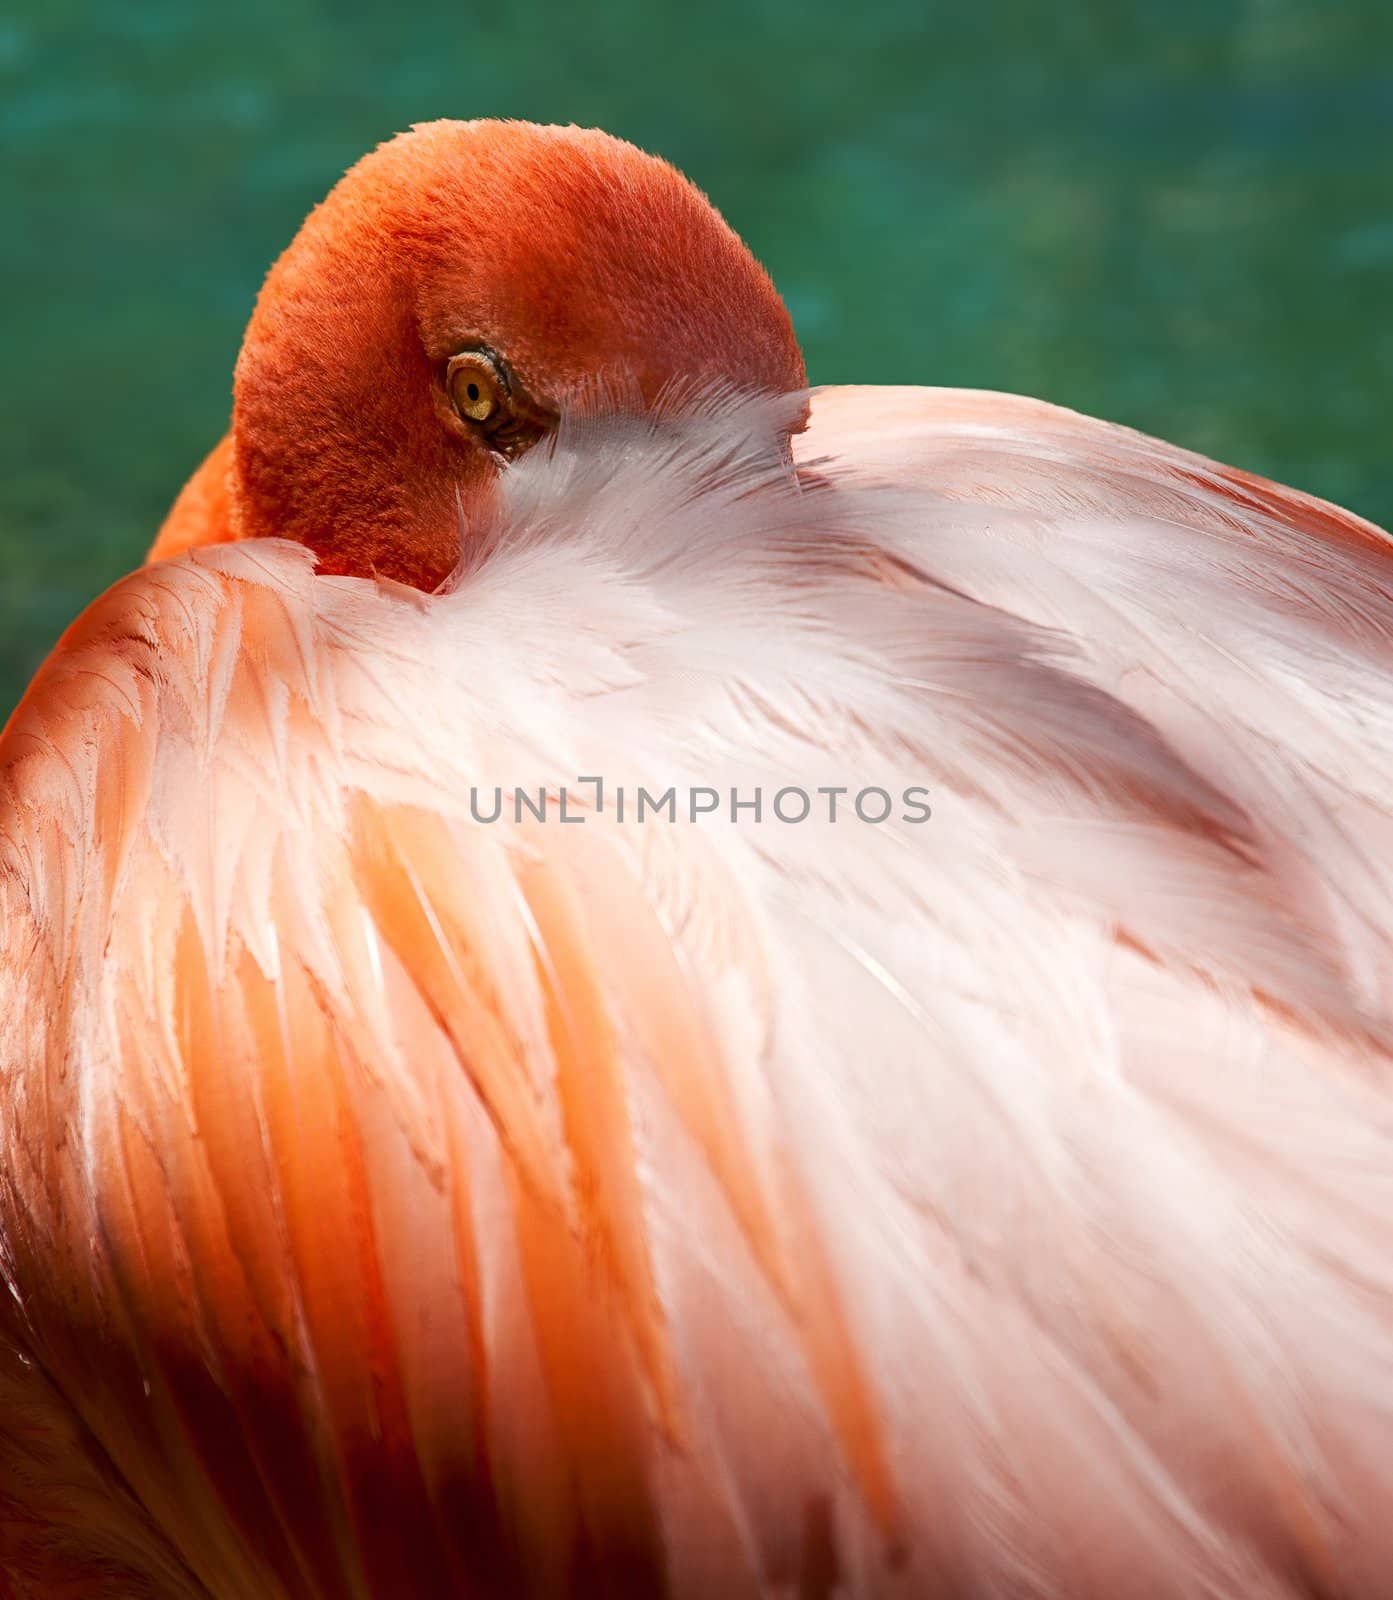 Eye of the Flamingo by steheap